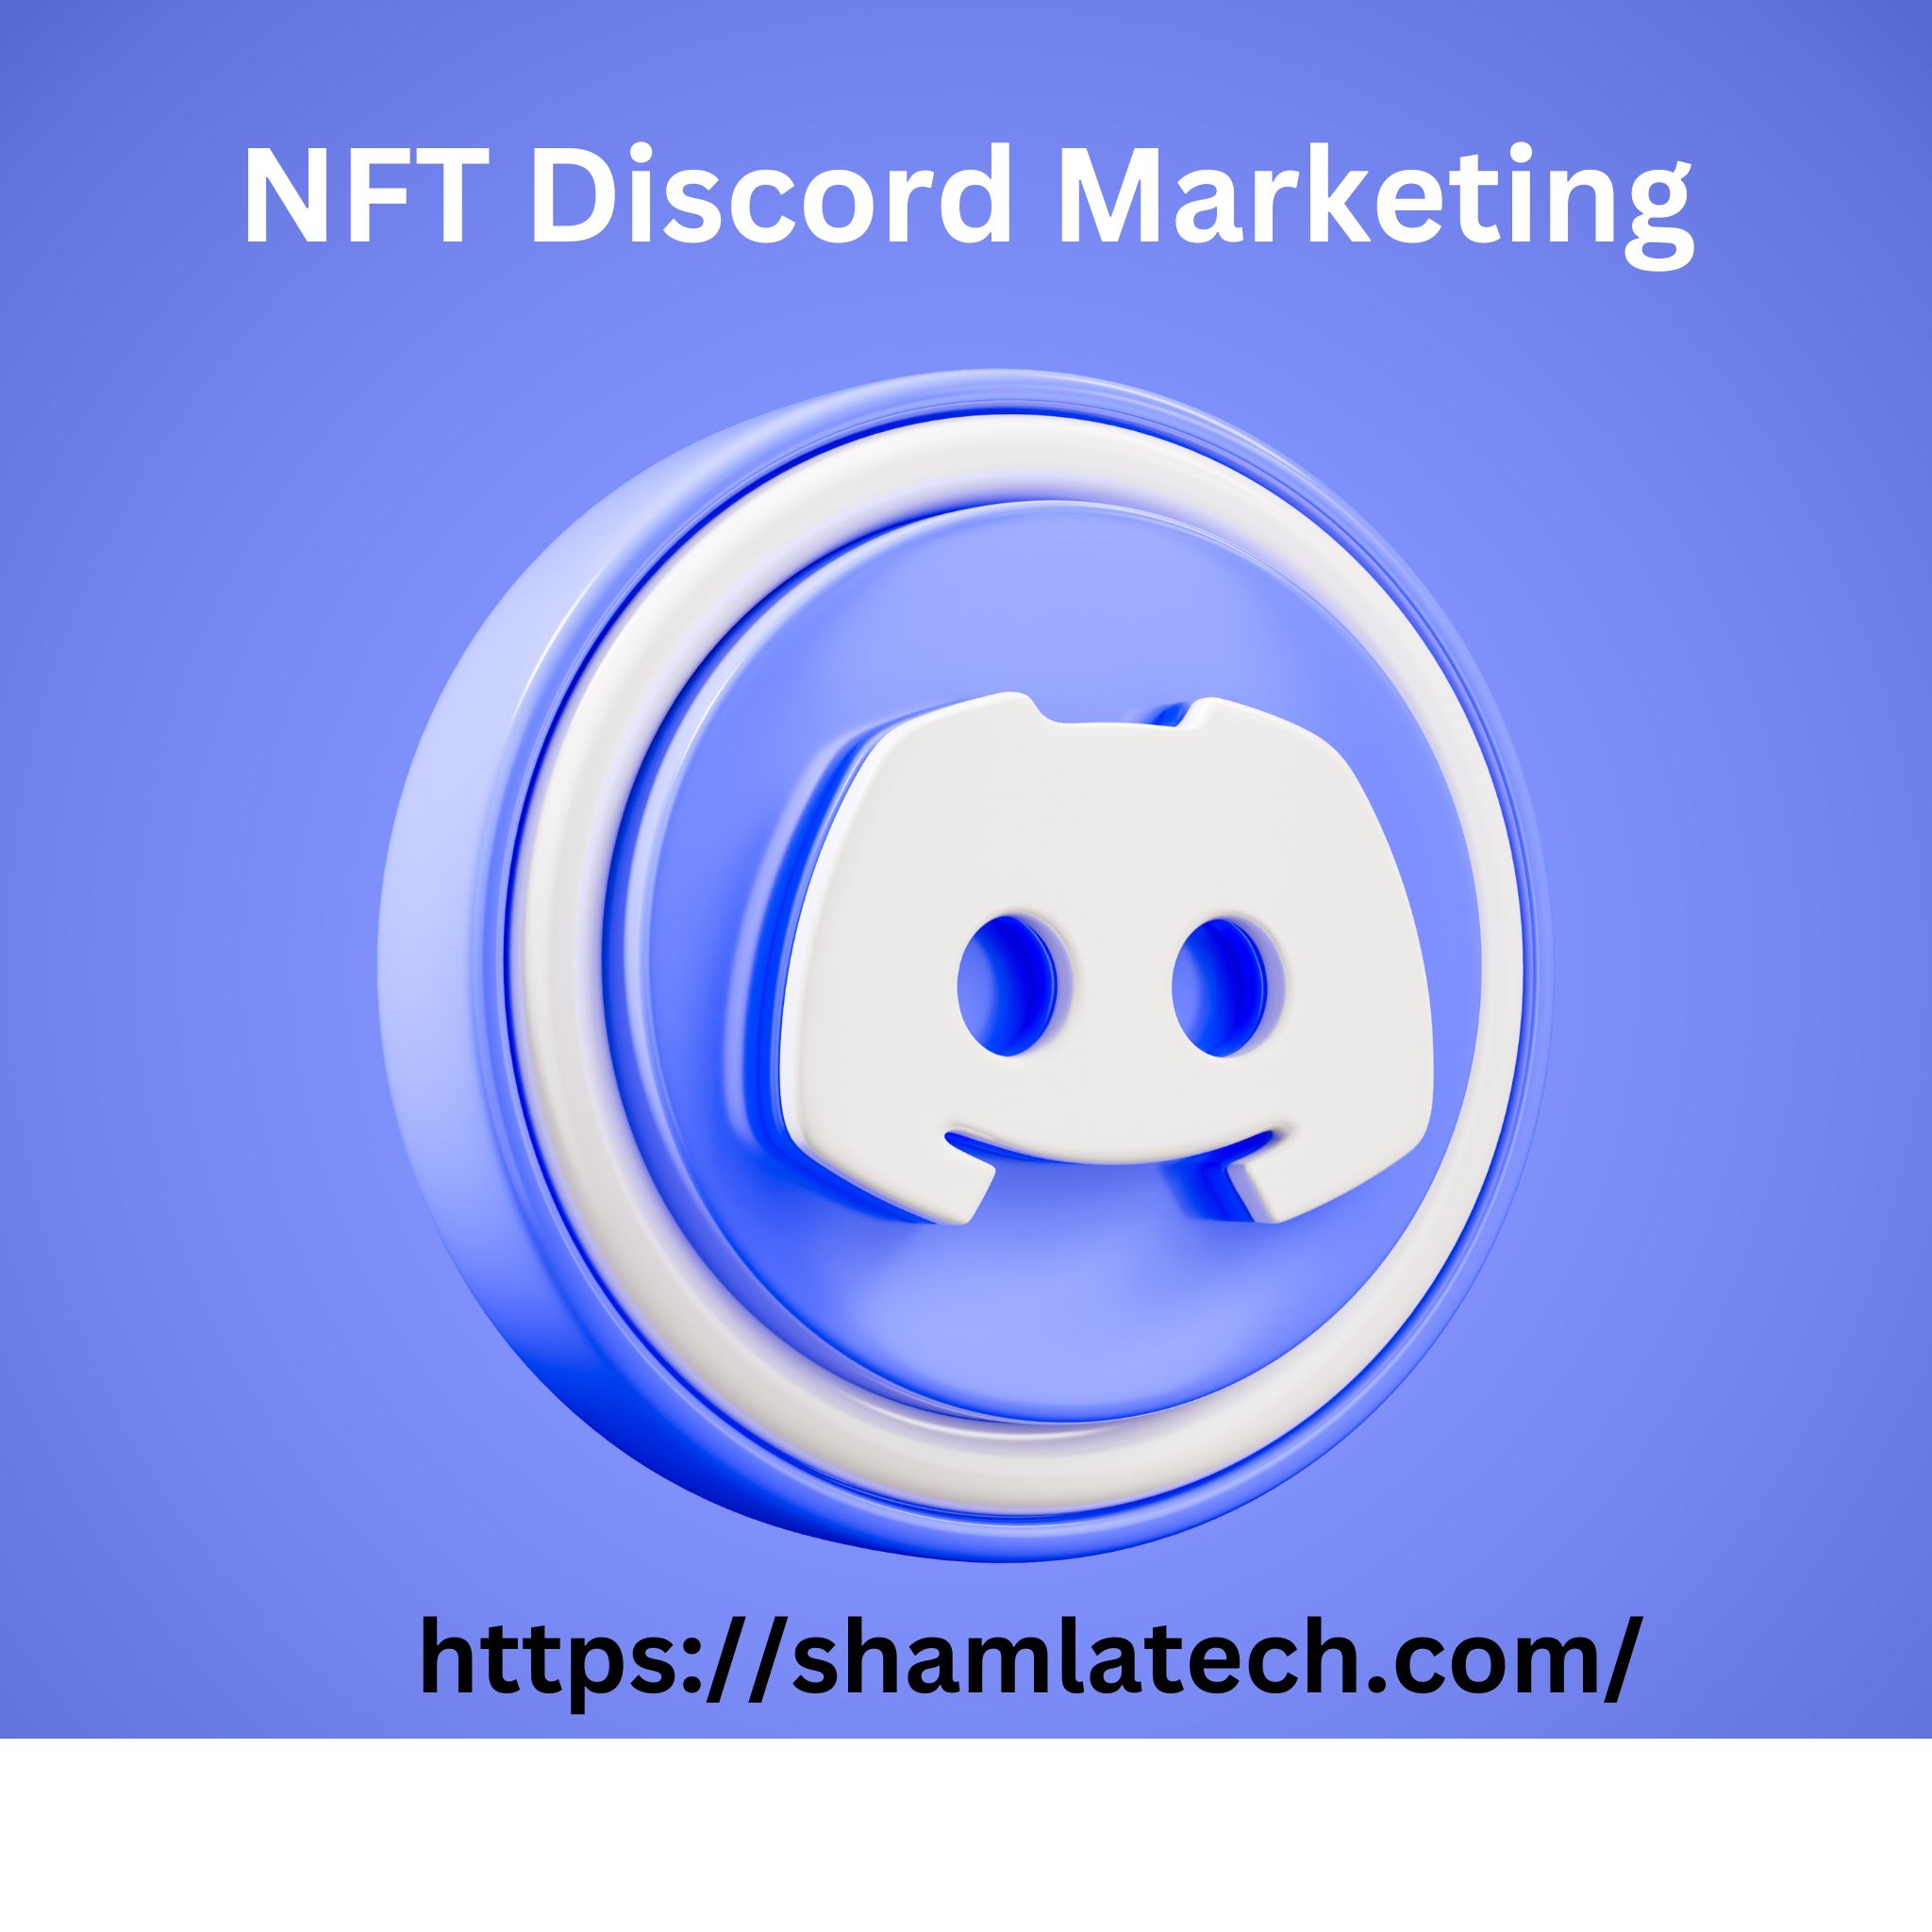  Top Discord NFT marketing company